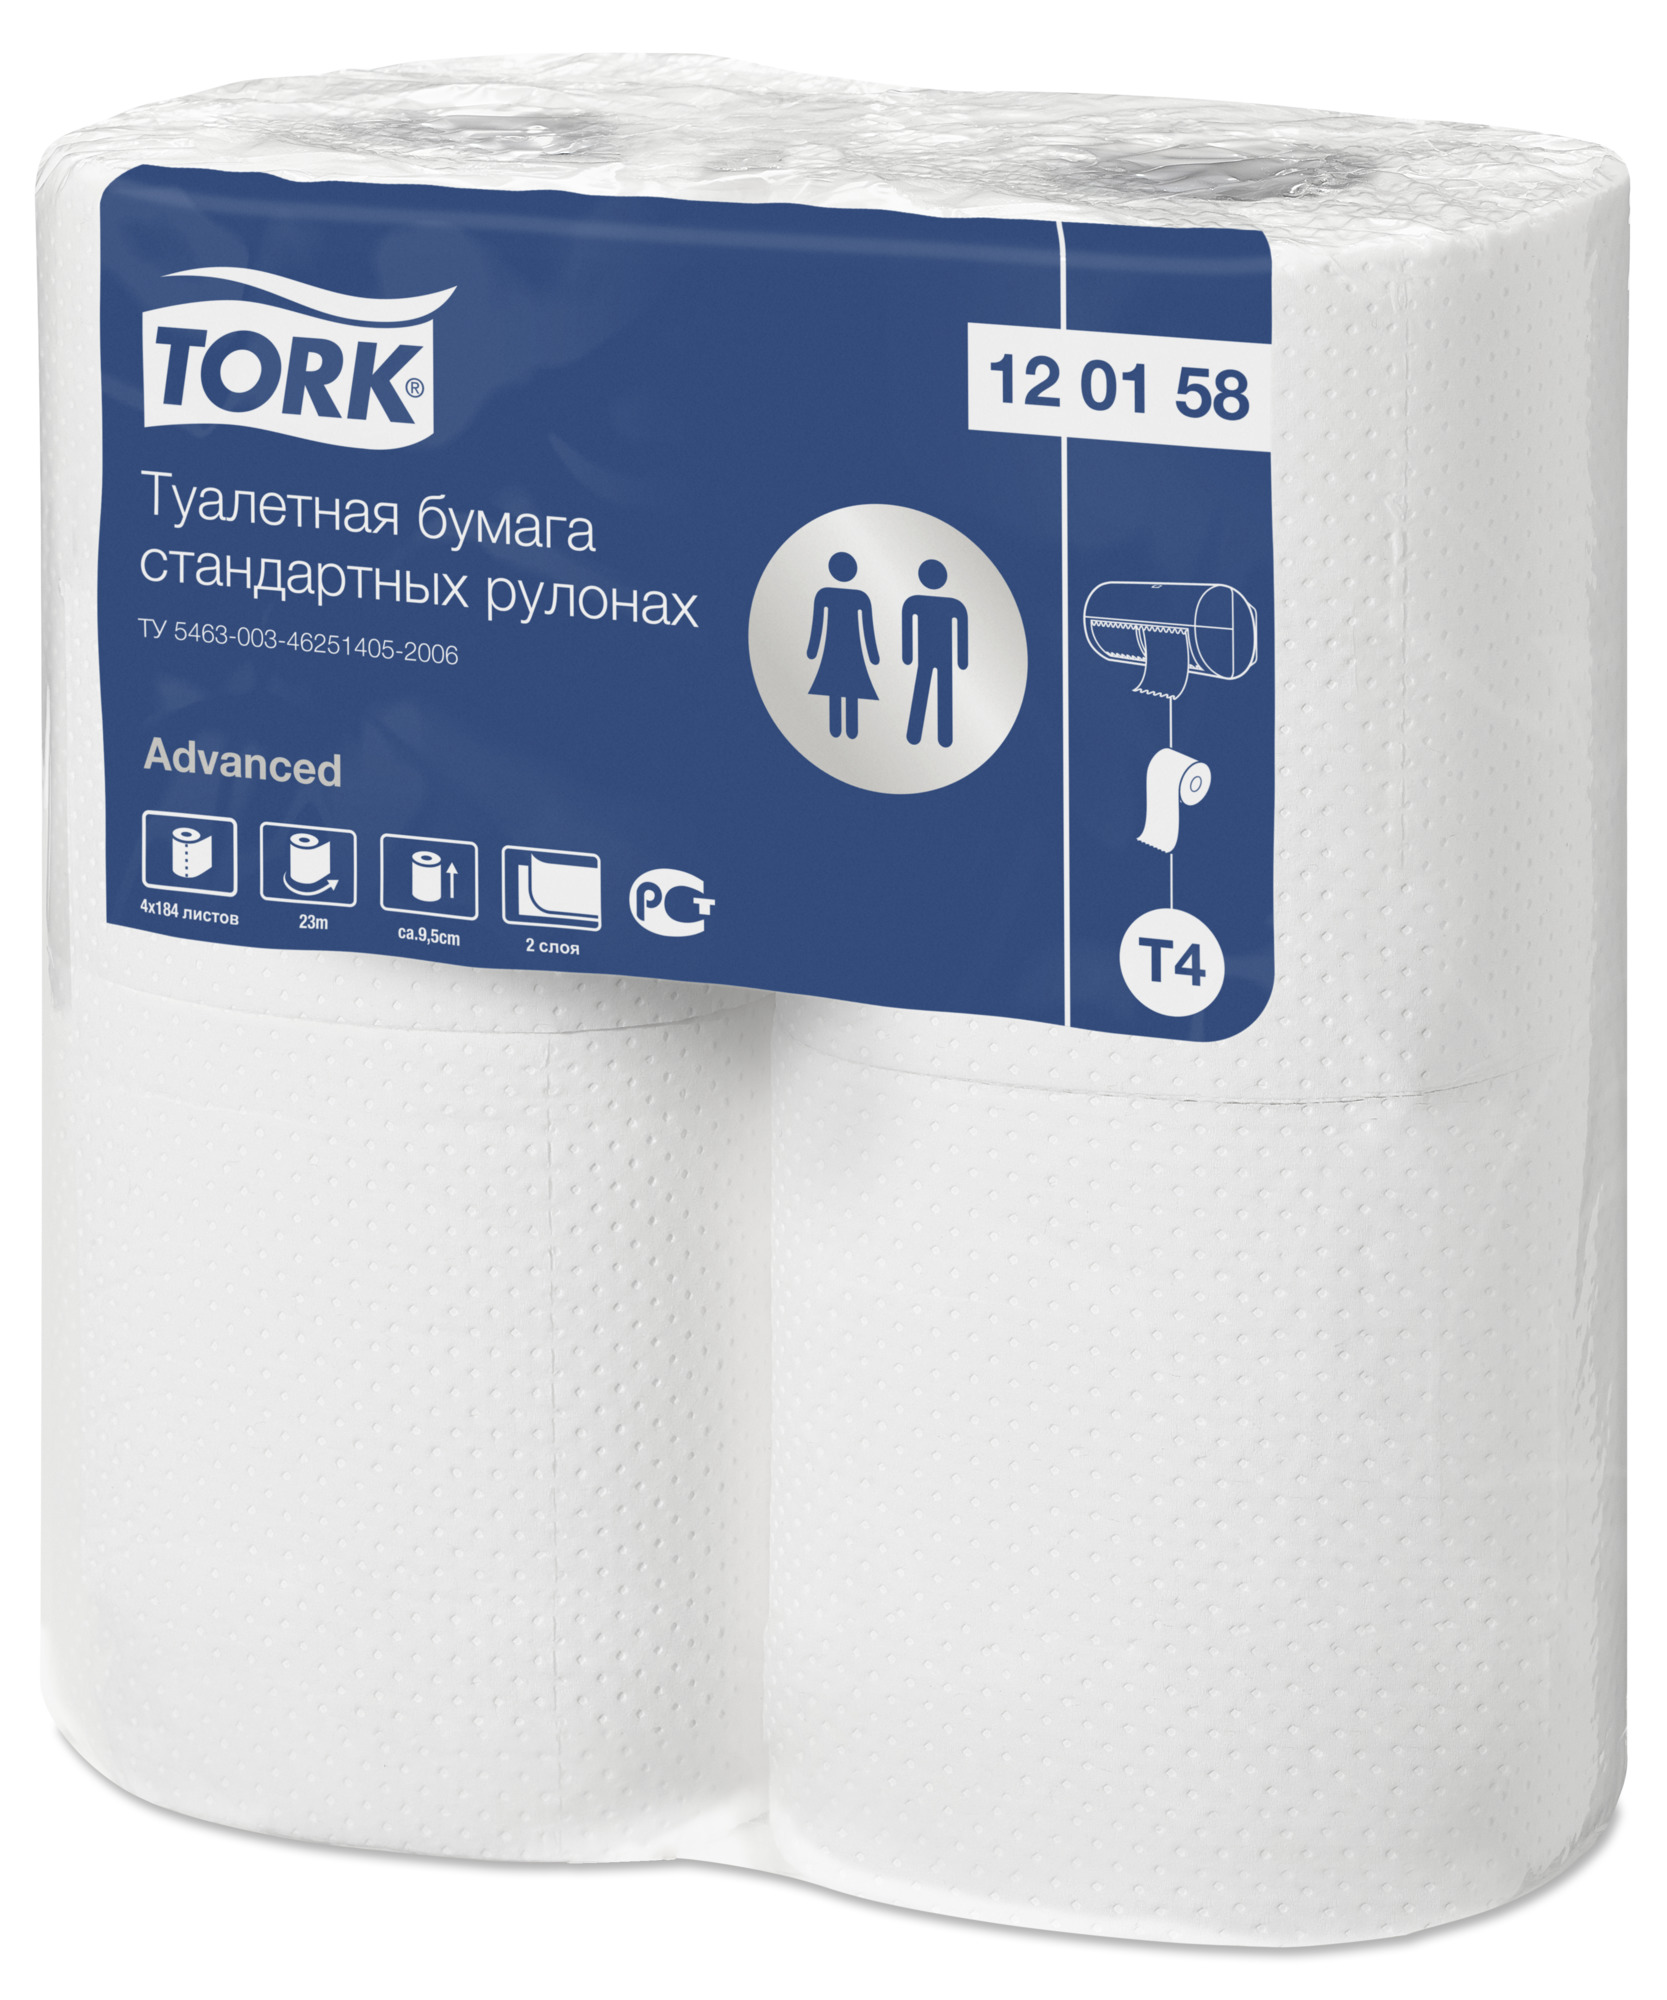 Длина рулона бумажного полотенца. 120158 Торк. Туалетная бумага торк 120158. Бумага туалетная Tork "Advanced"(т6) 2-слойная, Mid-Size рулон. Туалетная бумага Tork Advanced 120158.